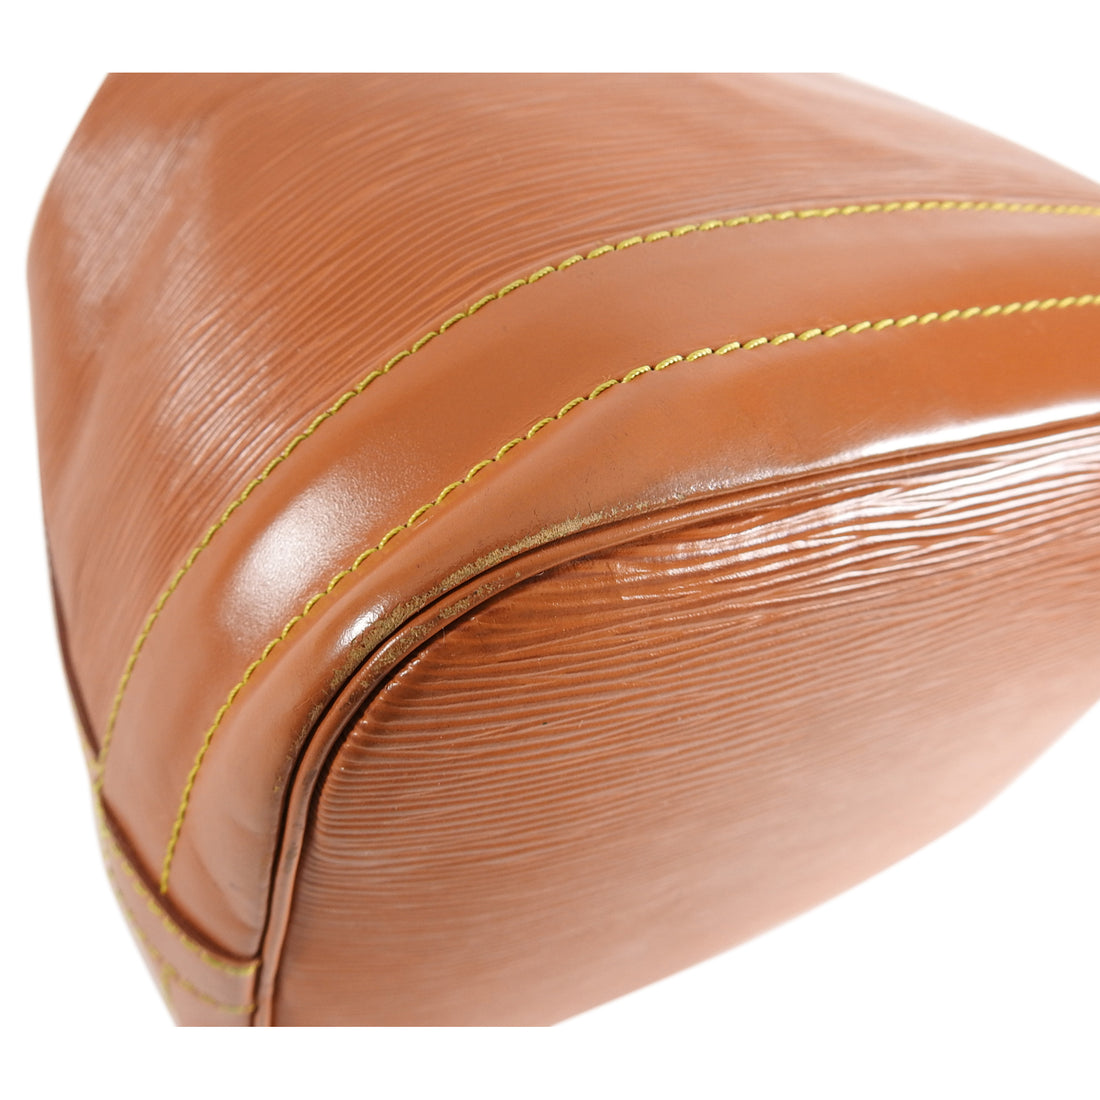 Lot - Louis Vuitton Black Epi Leather Noe Shoulder Bag Date Code: SD0966